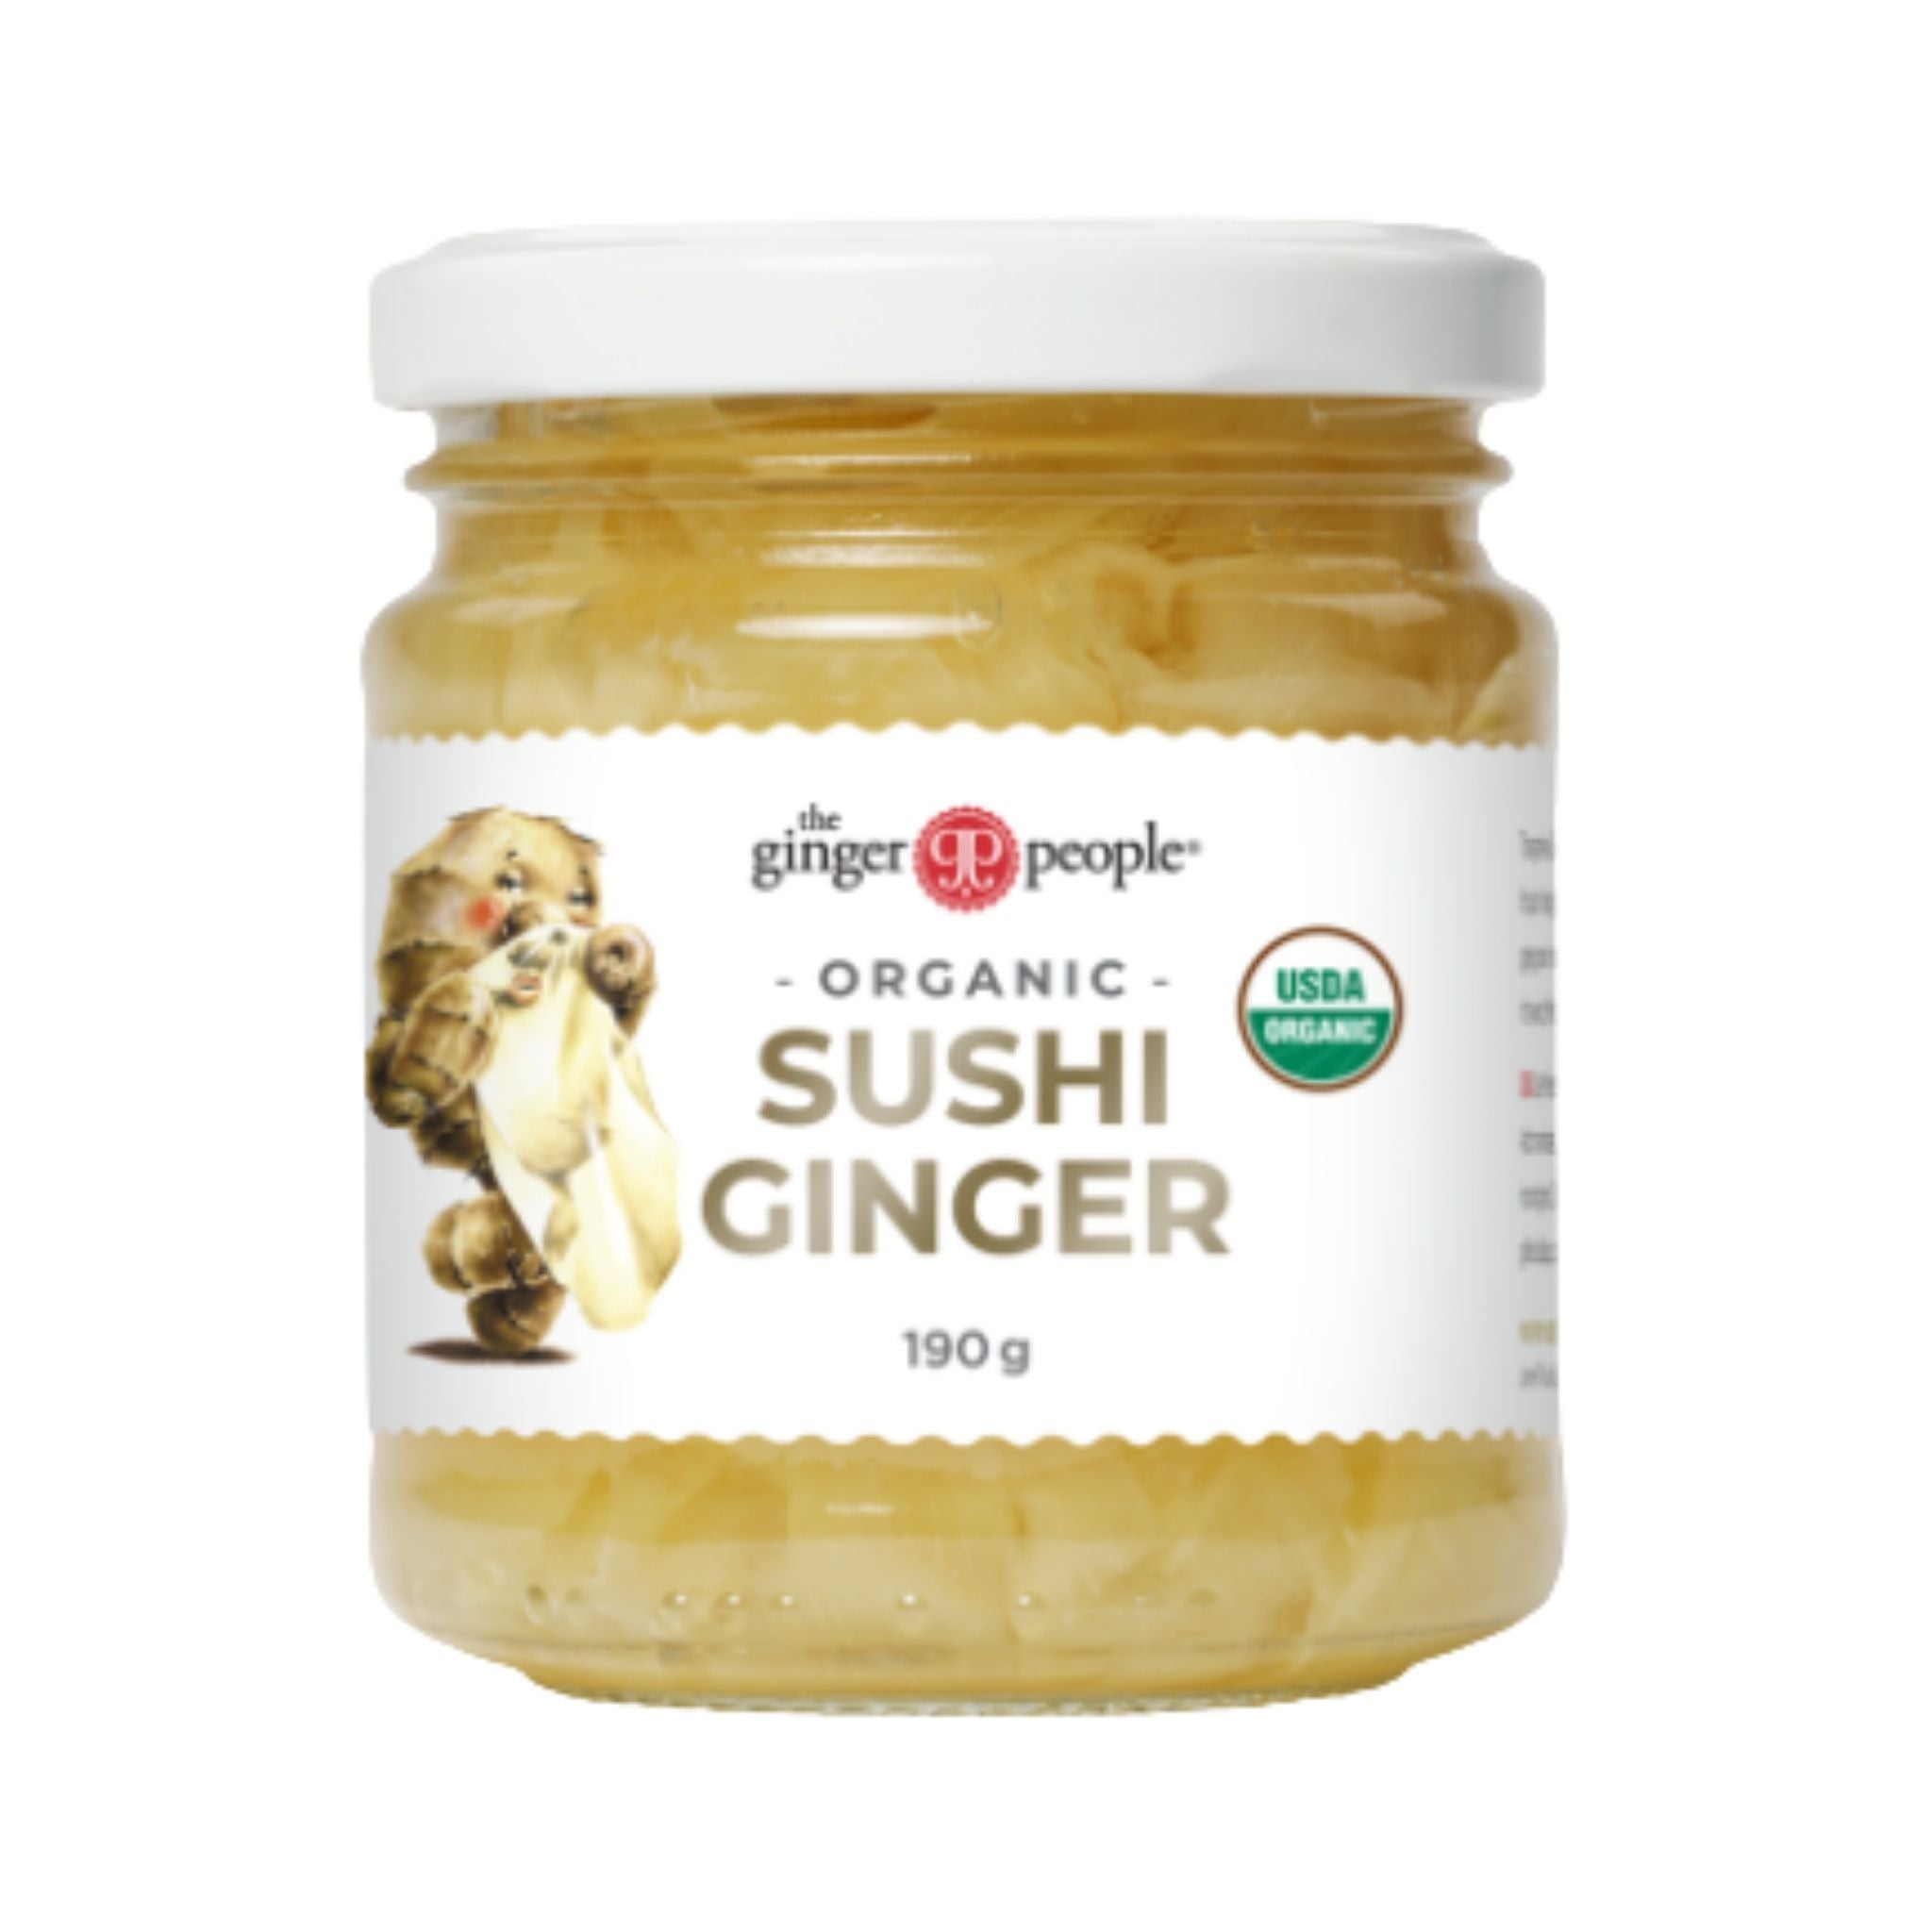 Pickled Sushi Ginger (Organic) - The ginger people. 190gr